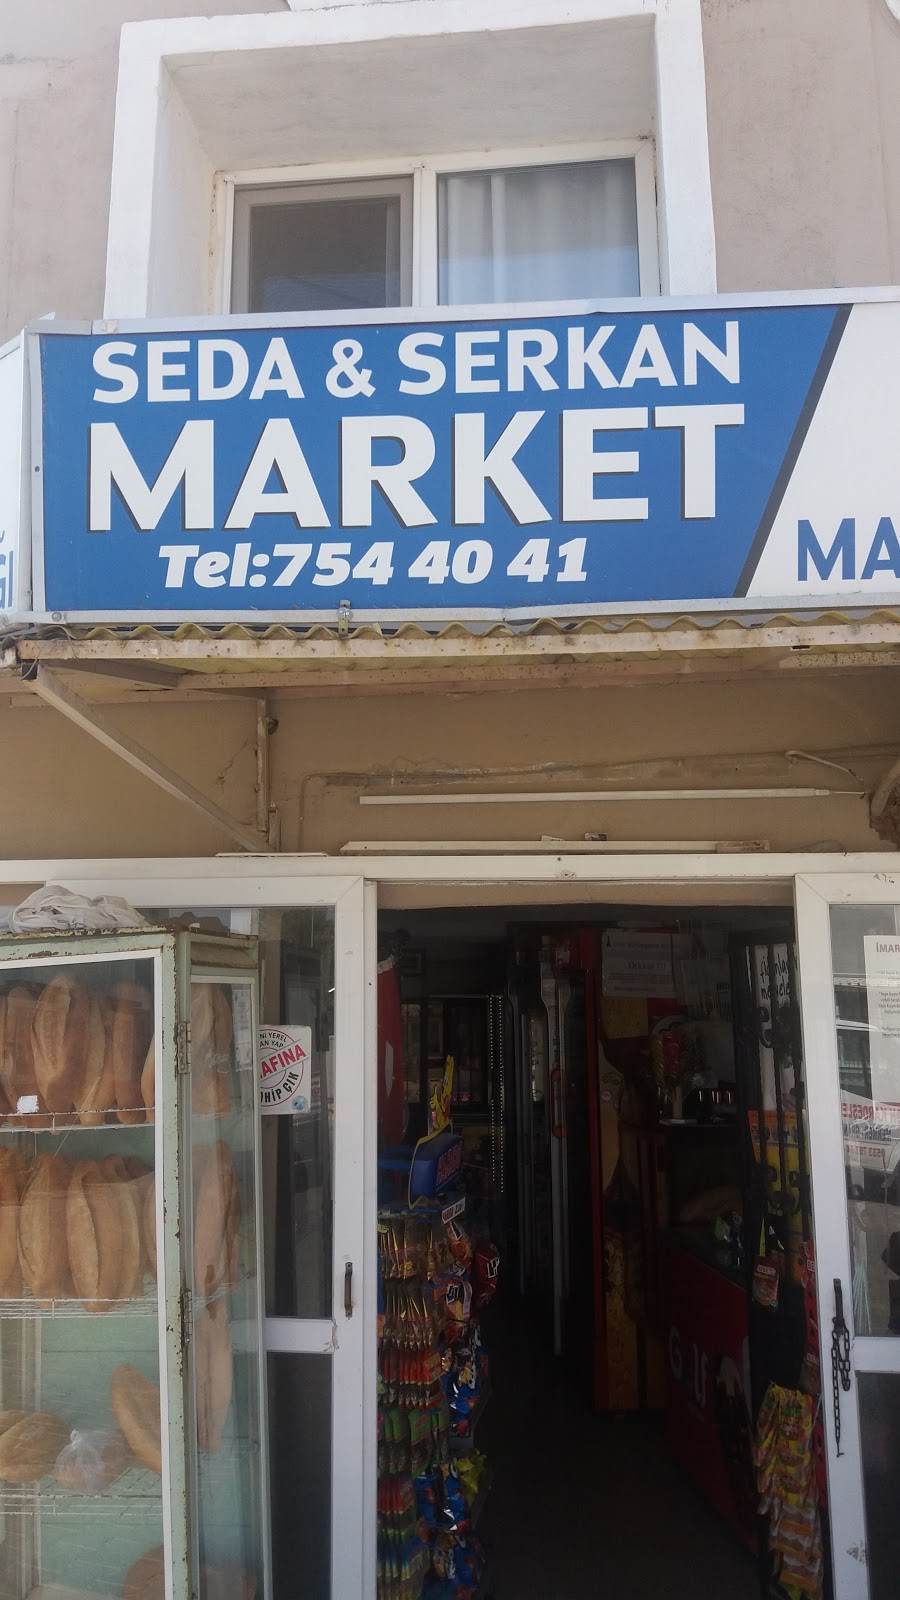 Seda & Serkan Market